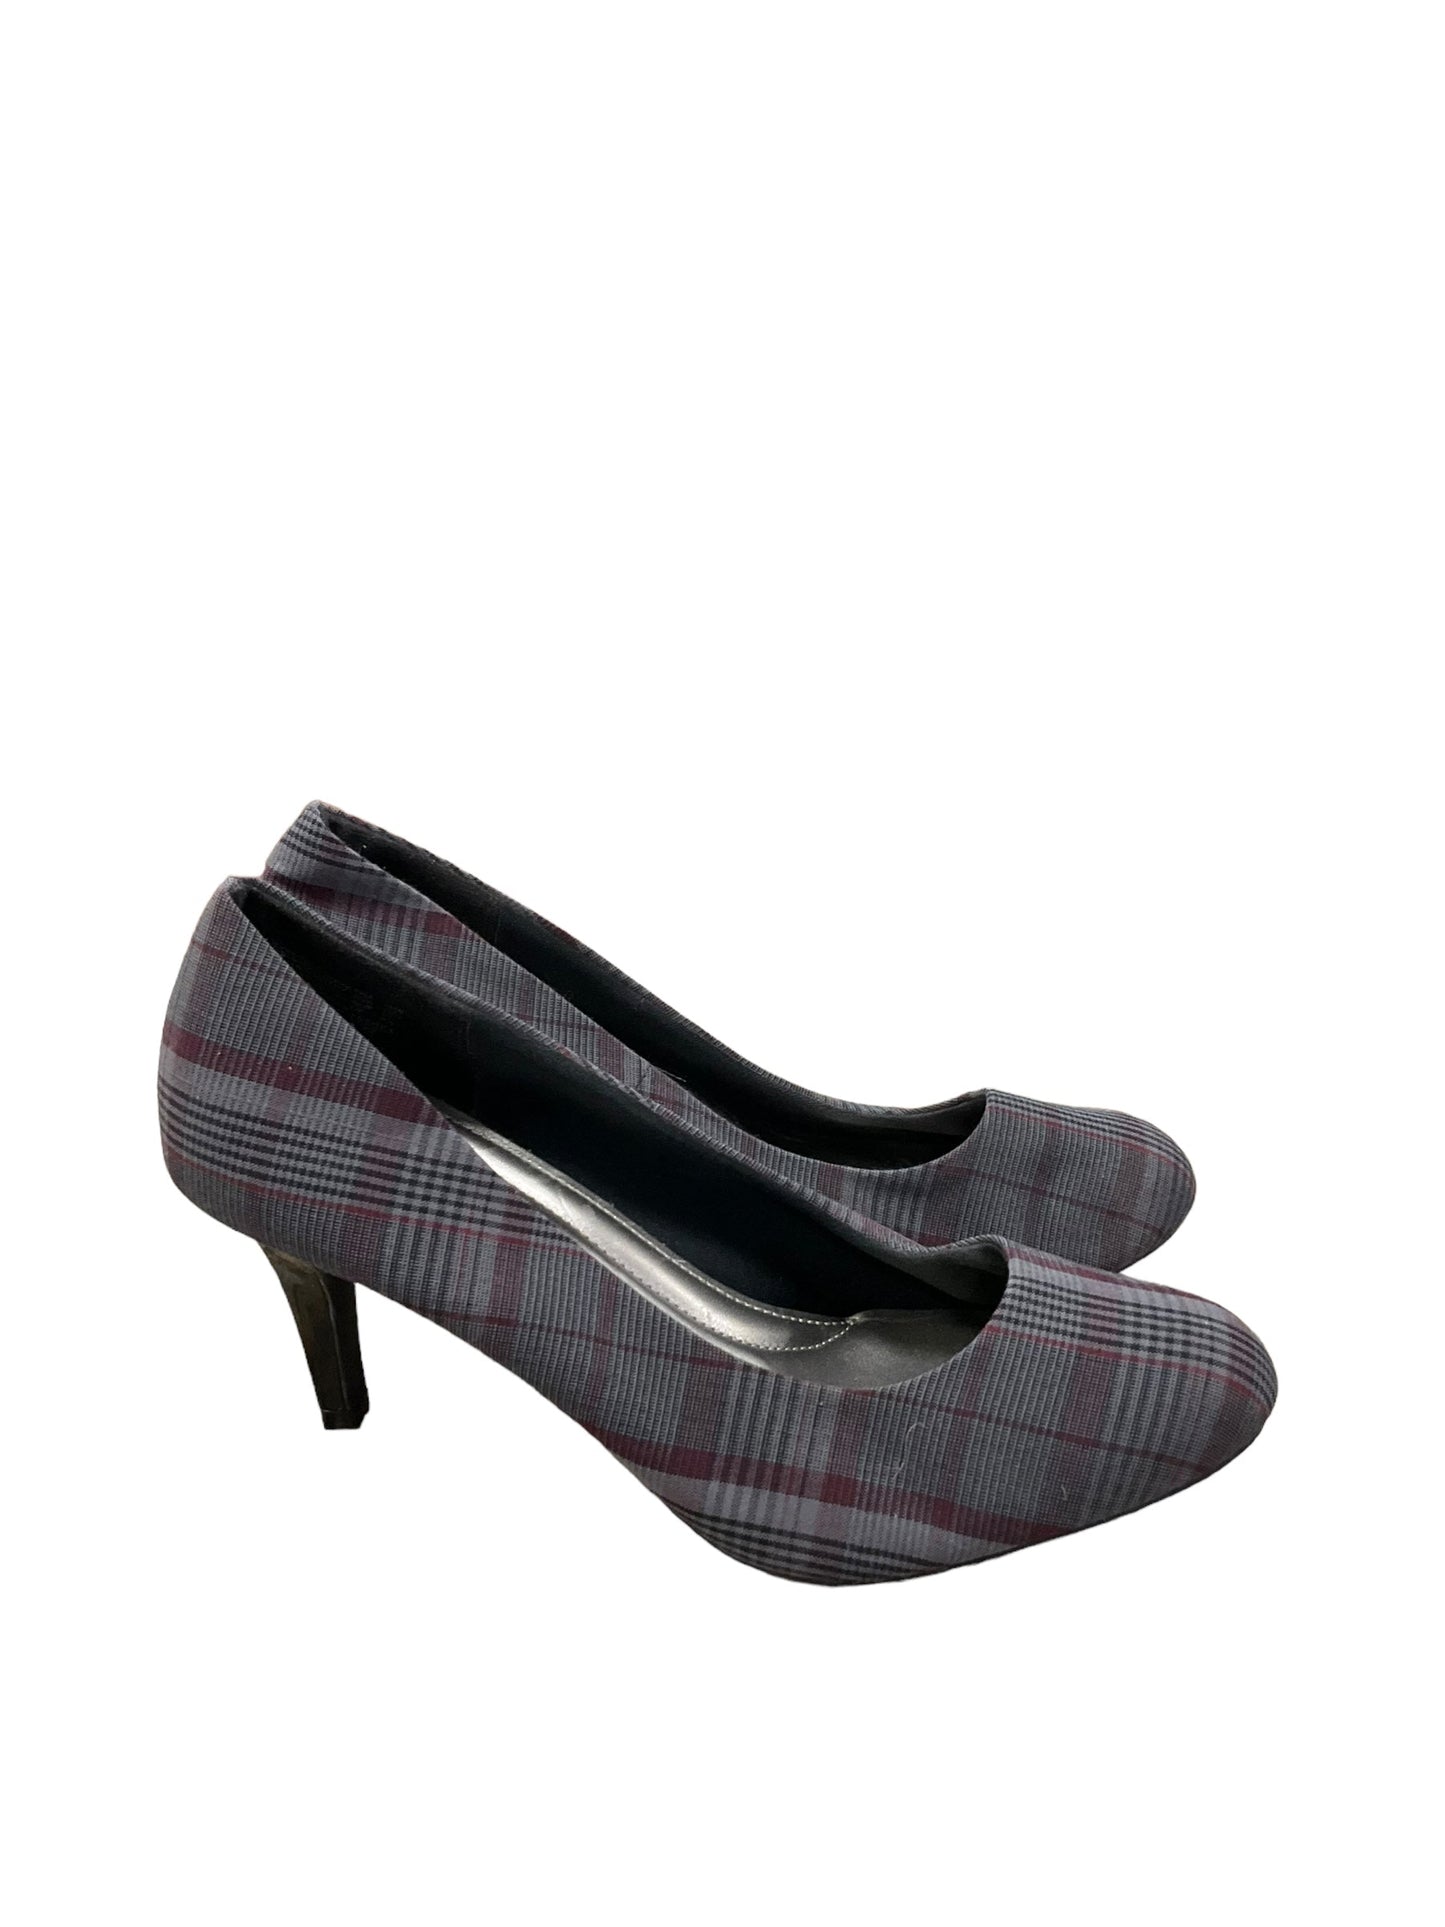 Shoes Heels Stiletto By Comfort Plus  Size: 10